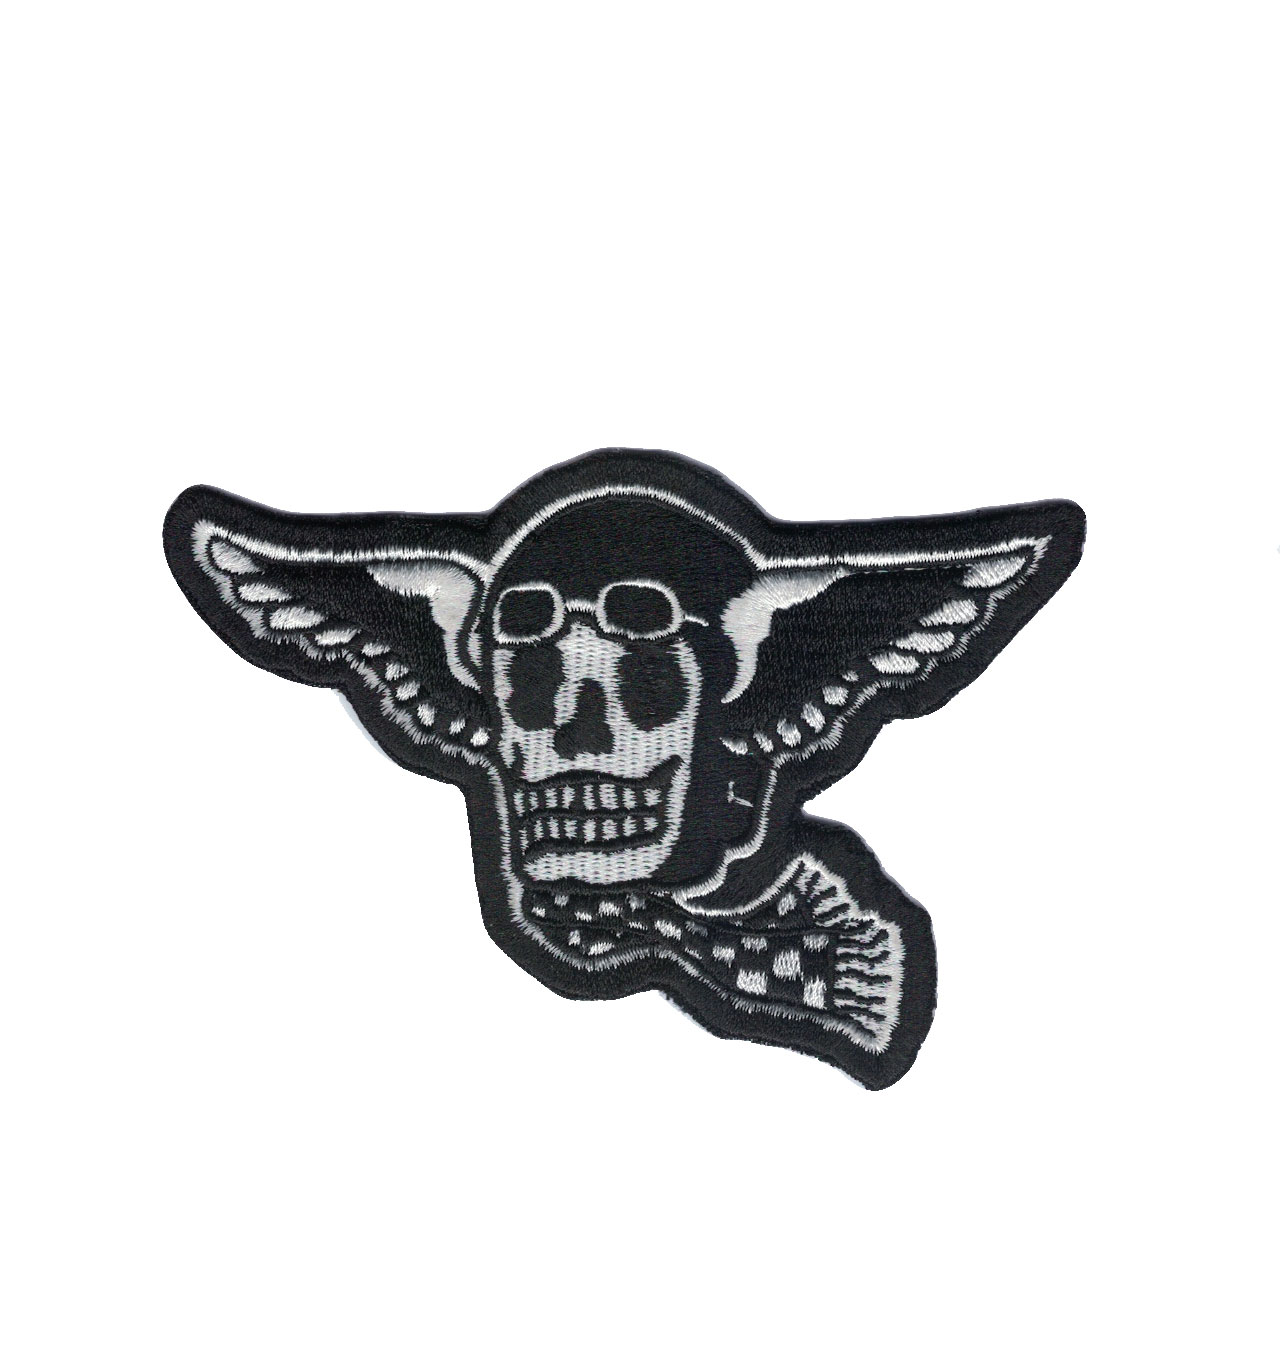 Joe King - Skull Logo Patch